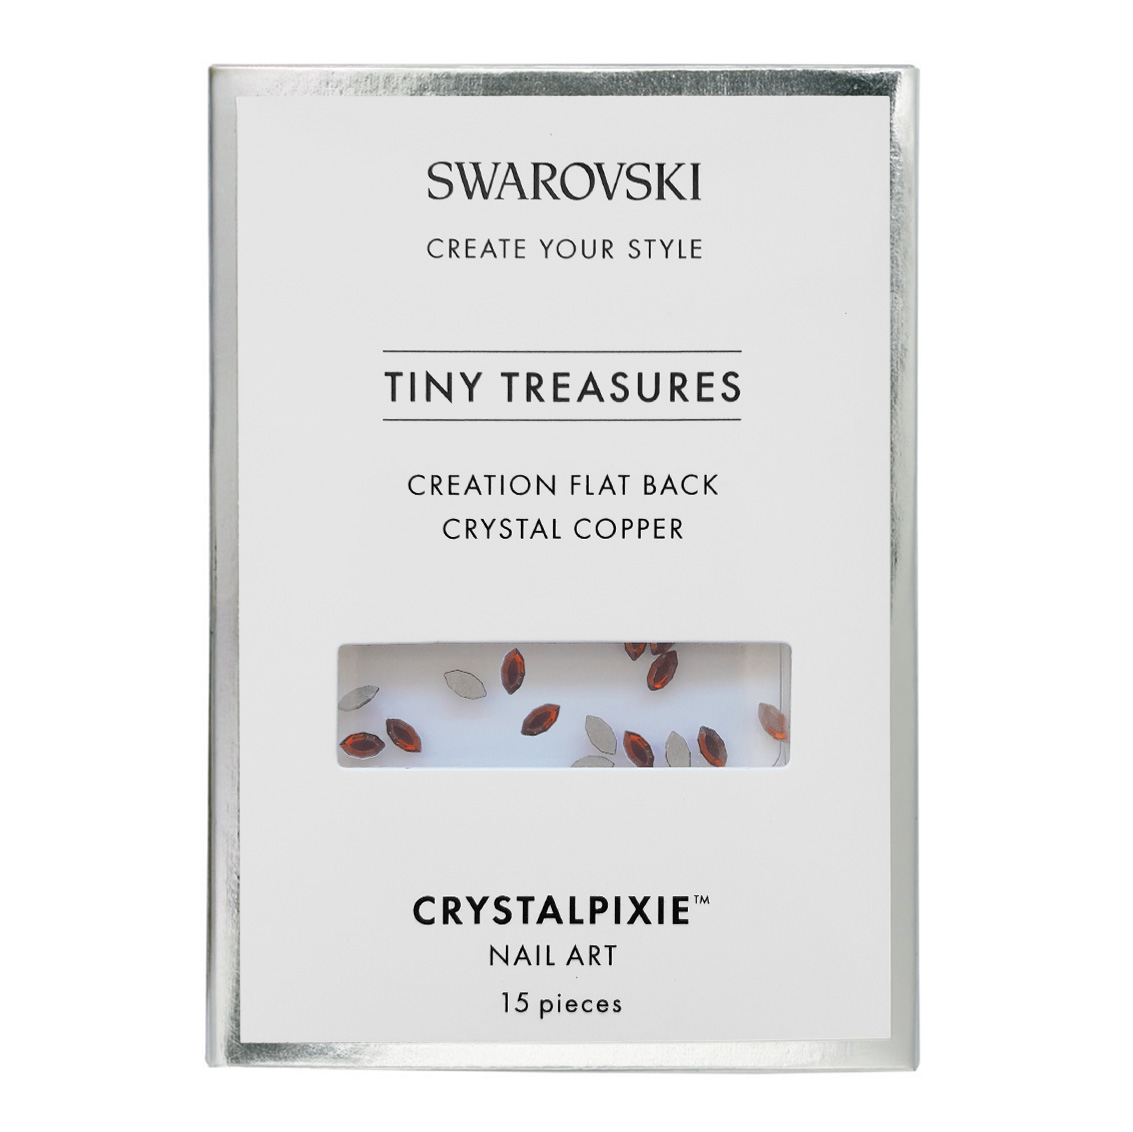 Creation Flat Back - Kristall Copper 15 Stück - Swarovski® Tiny Treasures